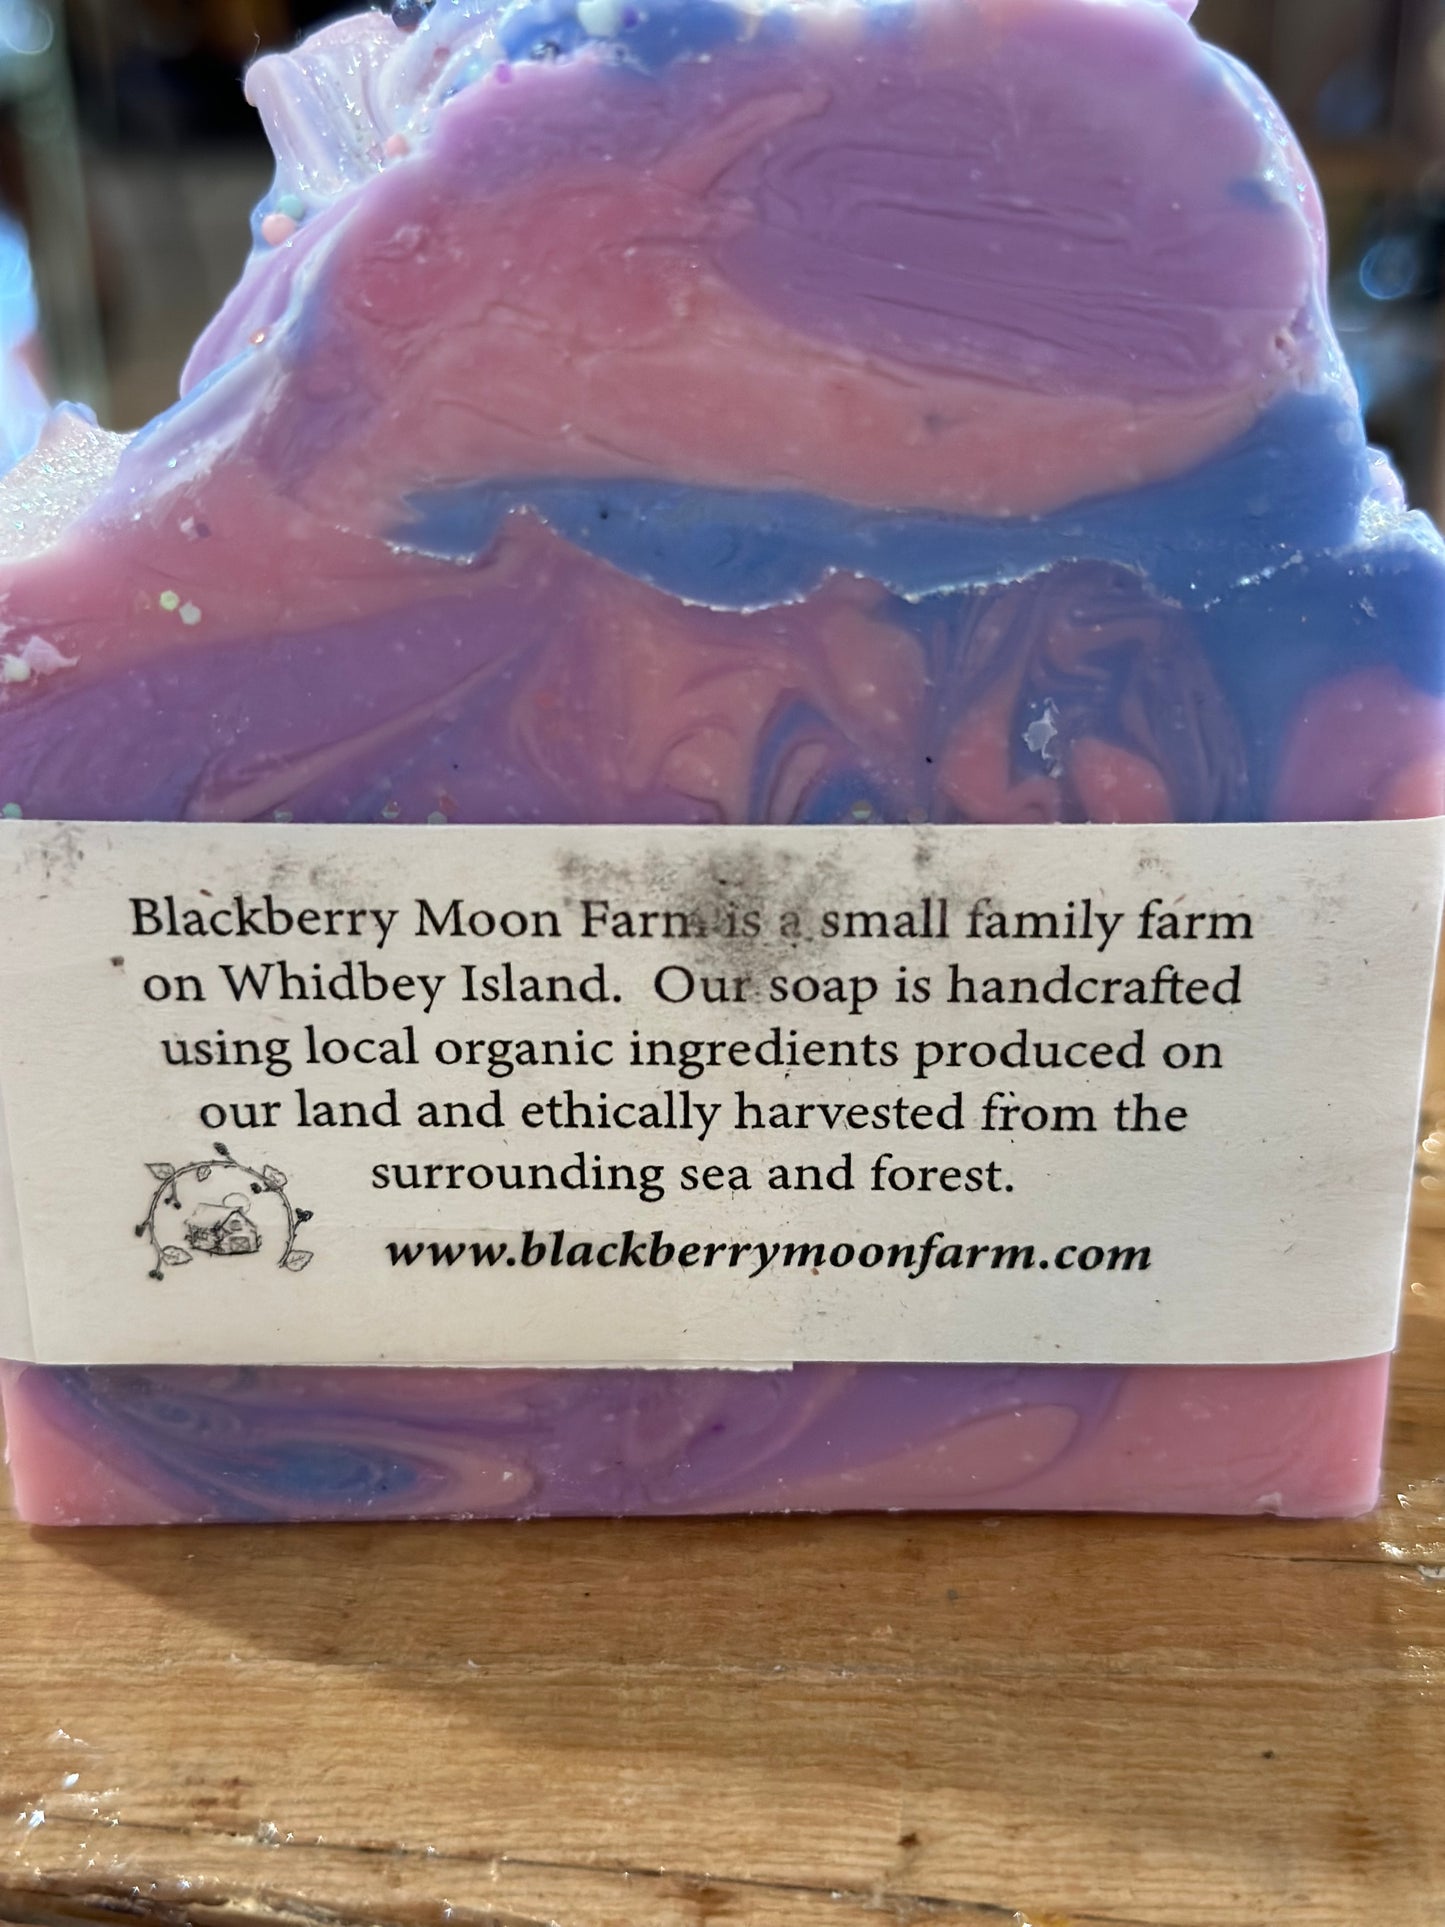 Unicorn Magic Soap Made in Whidbey Island, WA